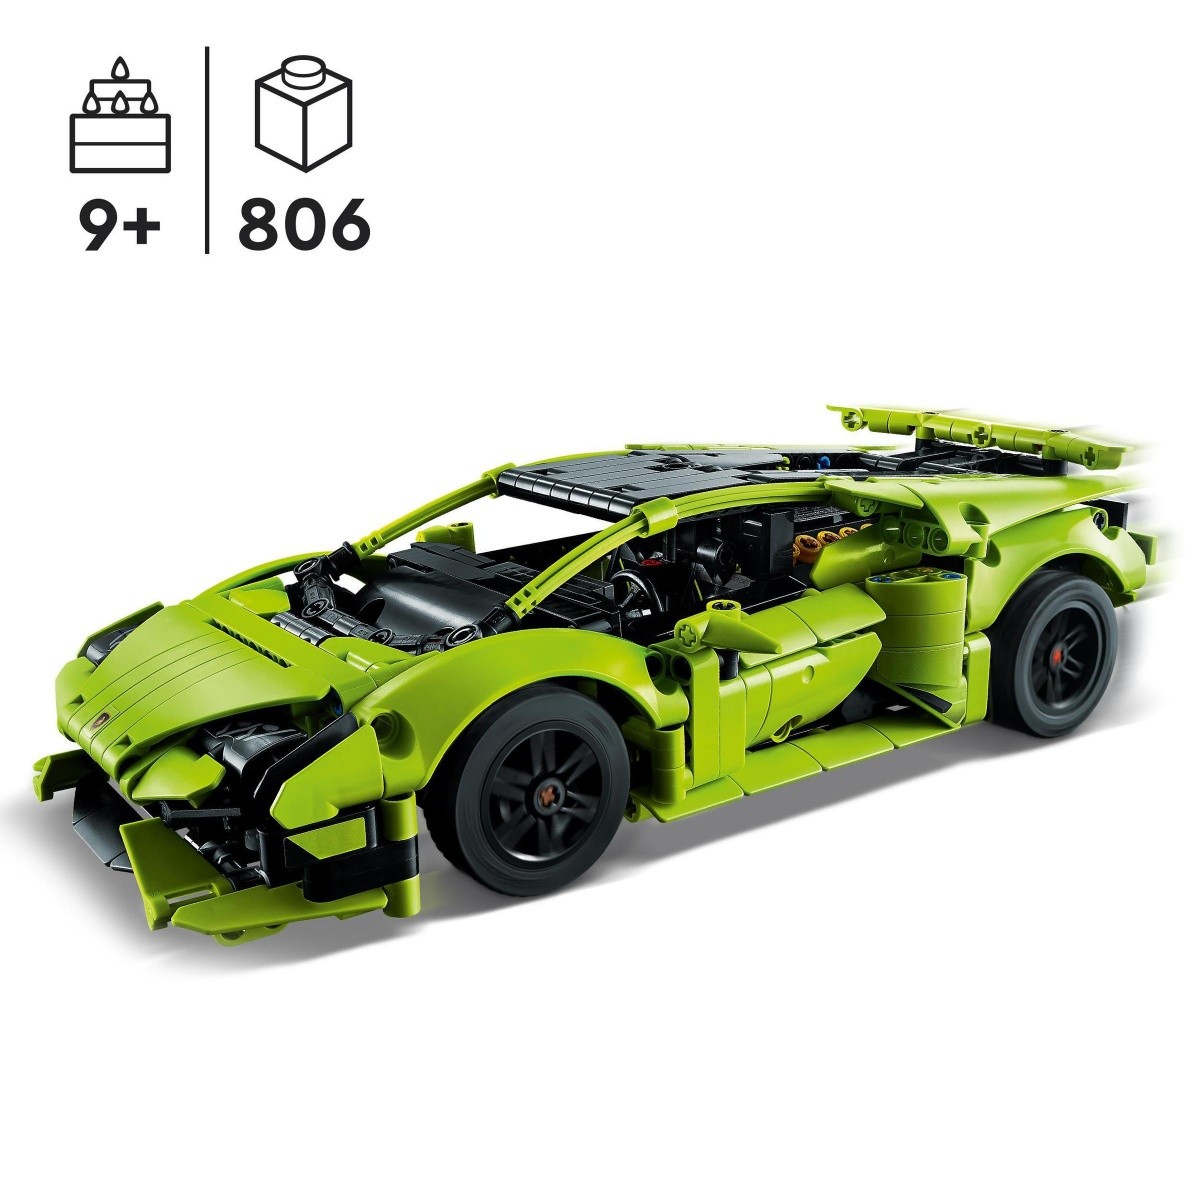 LEGO 42161 Technic Lamborghini Huracan Tecnica Model Car Set at Toys R Us UK